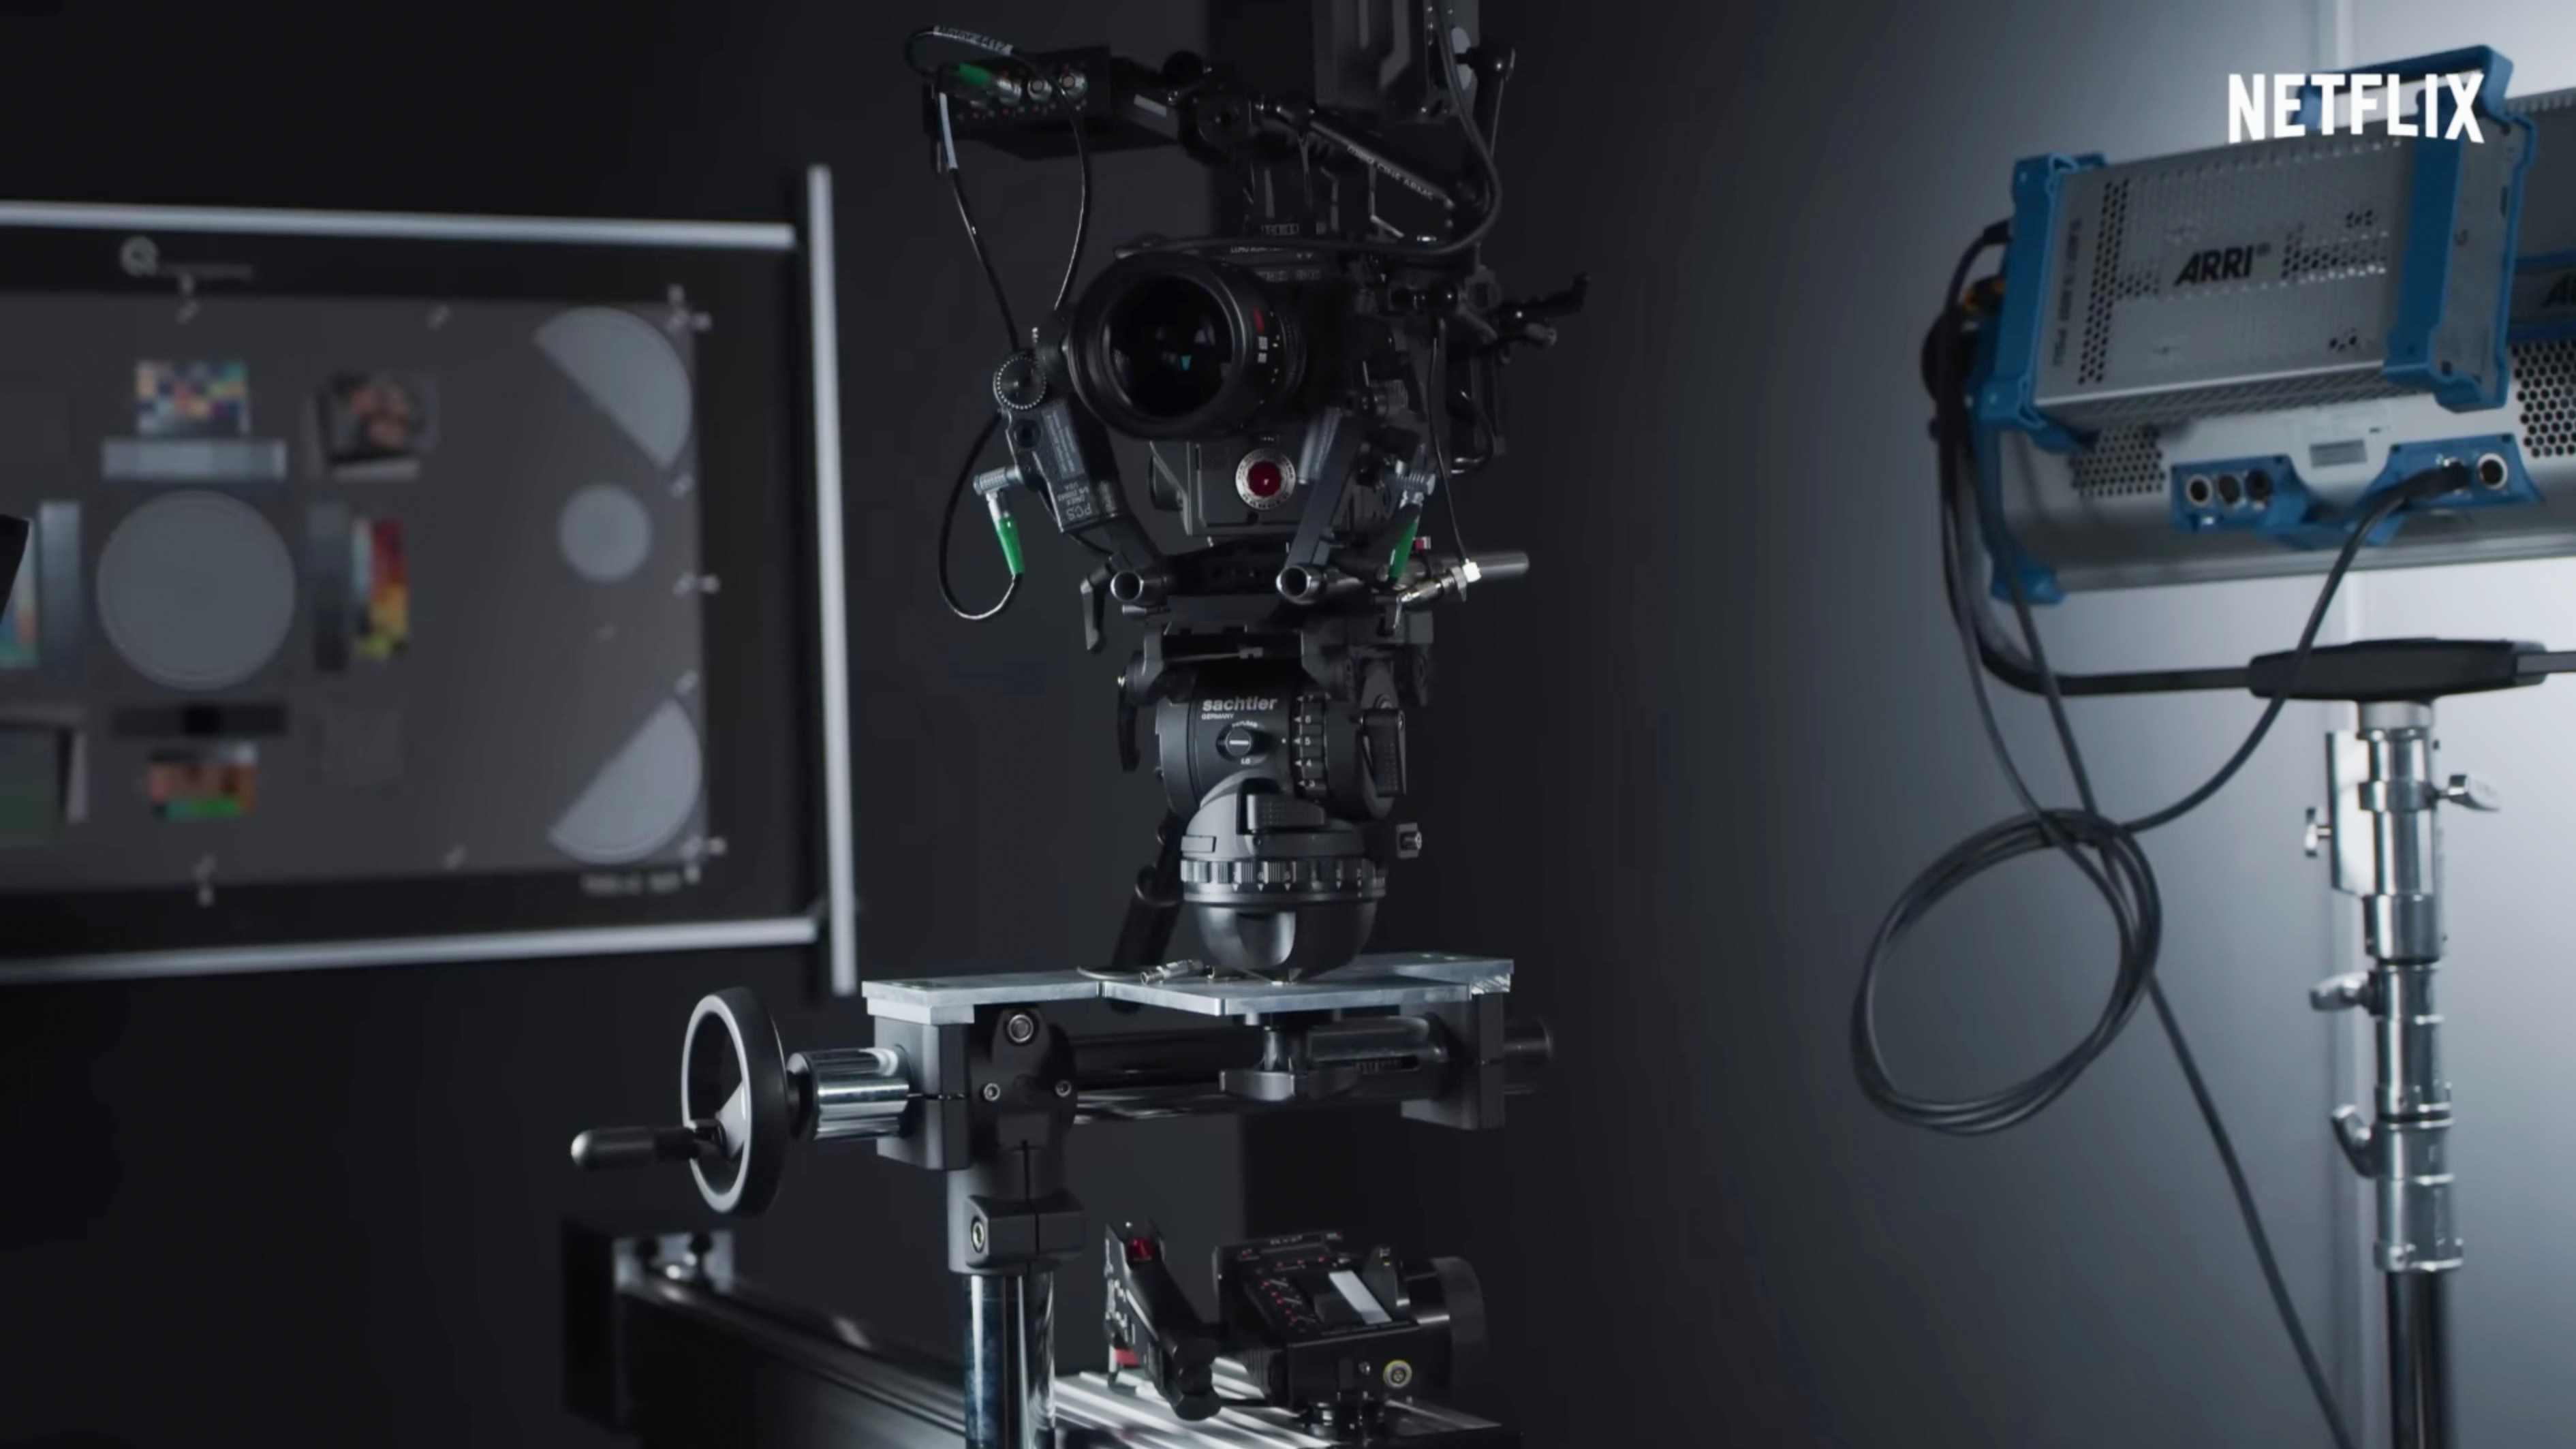 A Camera Rig in Netflix's Test Studio